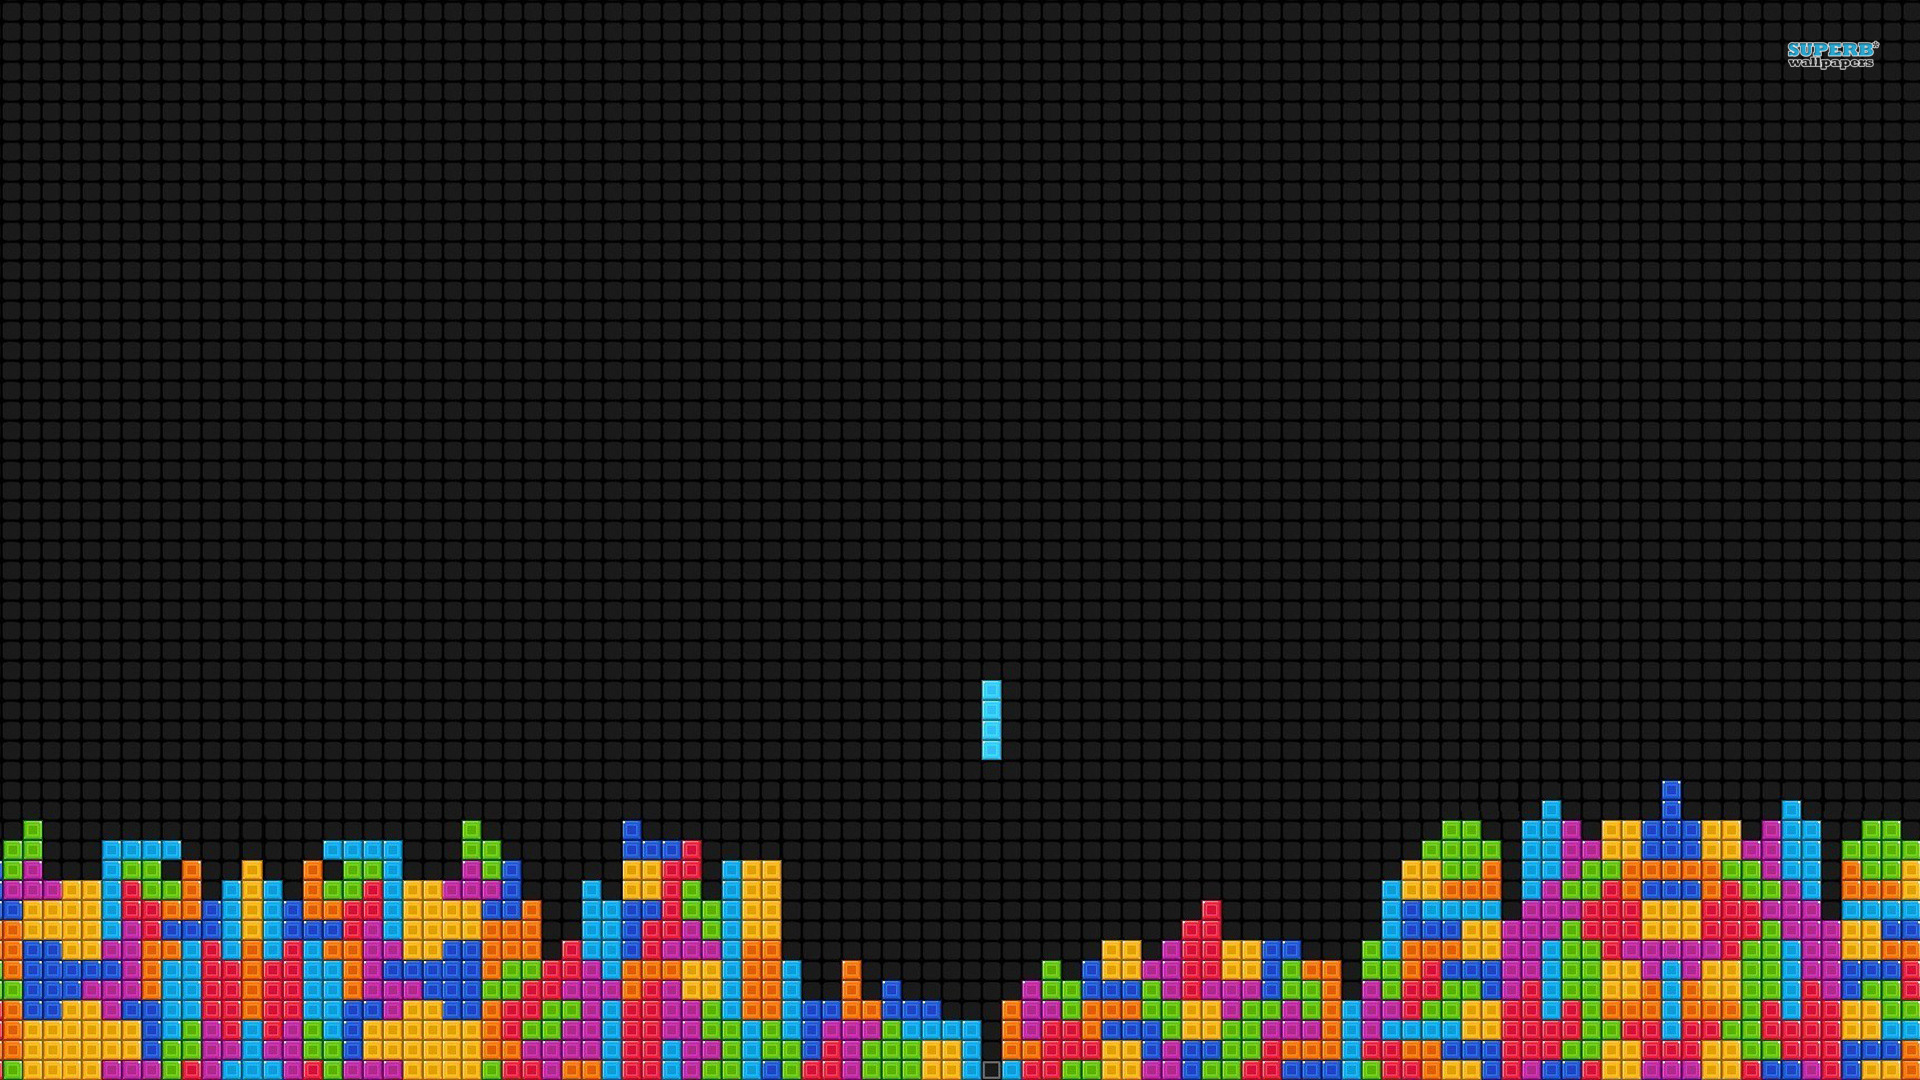 Tetris Party Deluxe Computer Wallpapers Desktop HD Wallpapers Download Free Images Wallpaper [wallpaper981.blogspot.com]